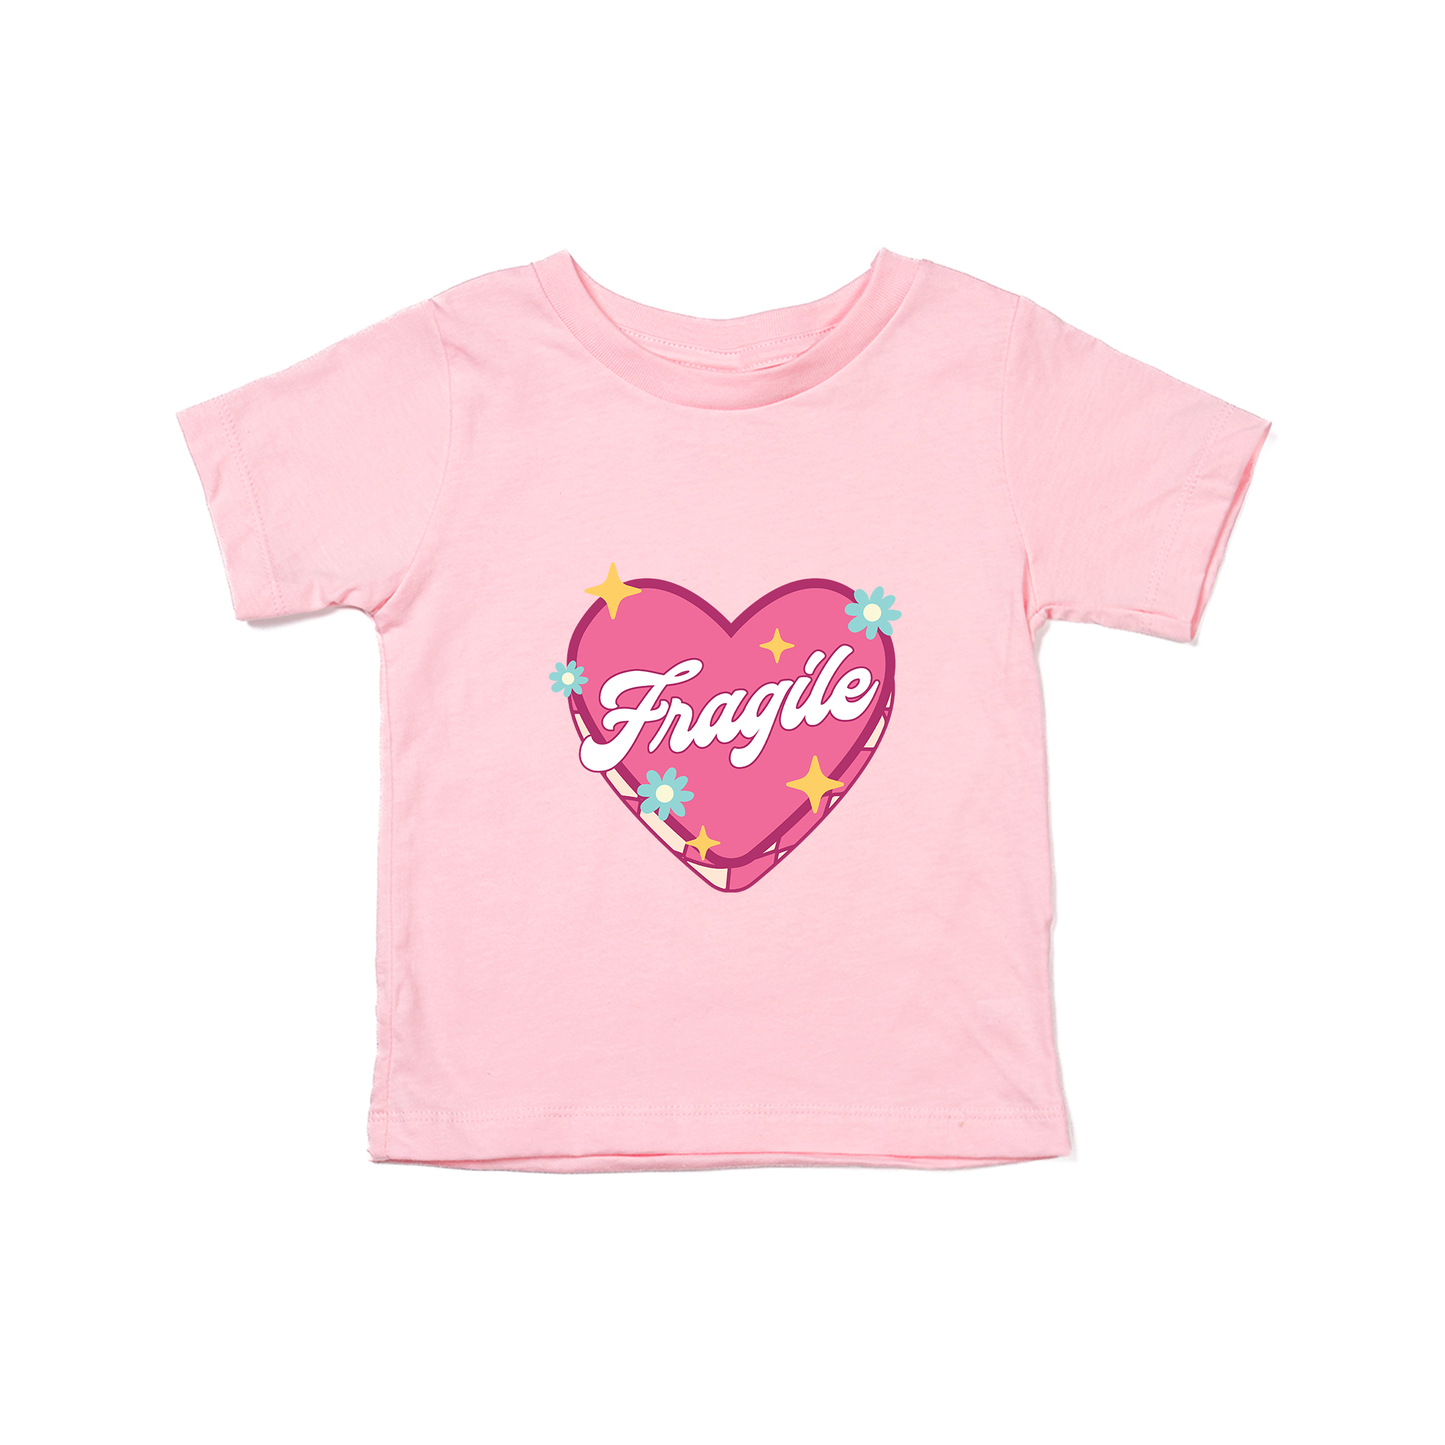 Fragile - Kids Tee (Pink)